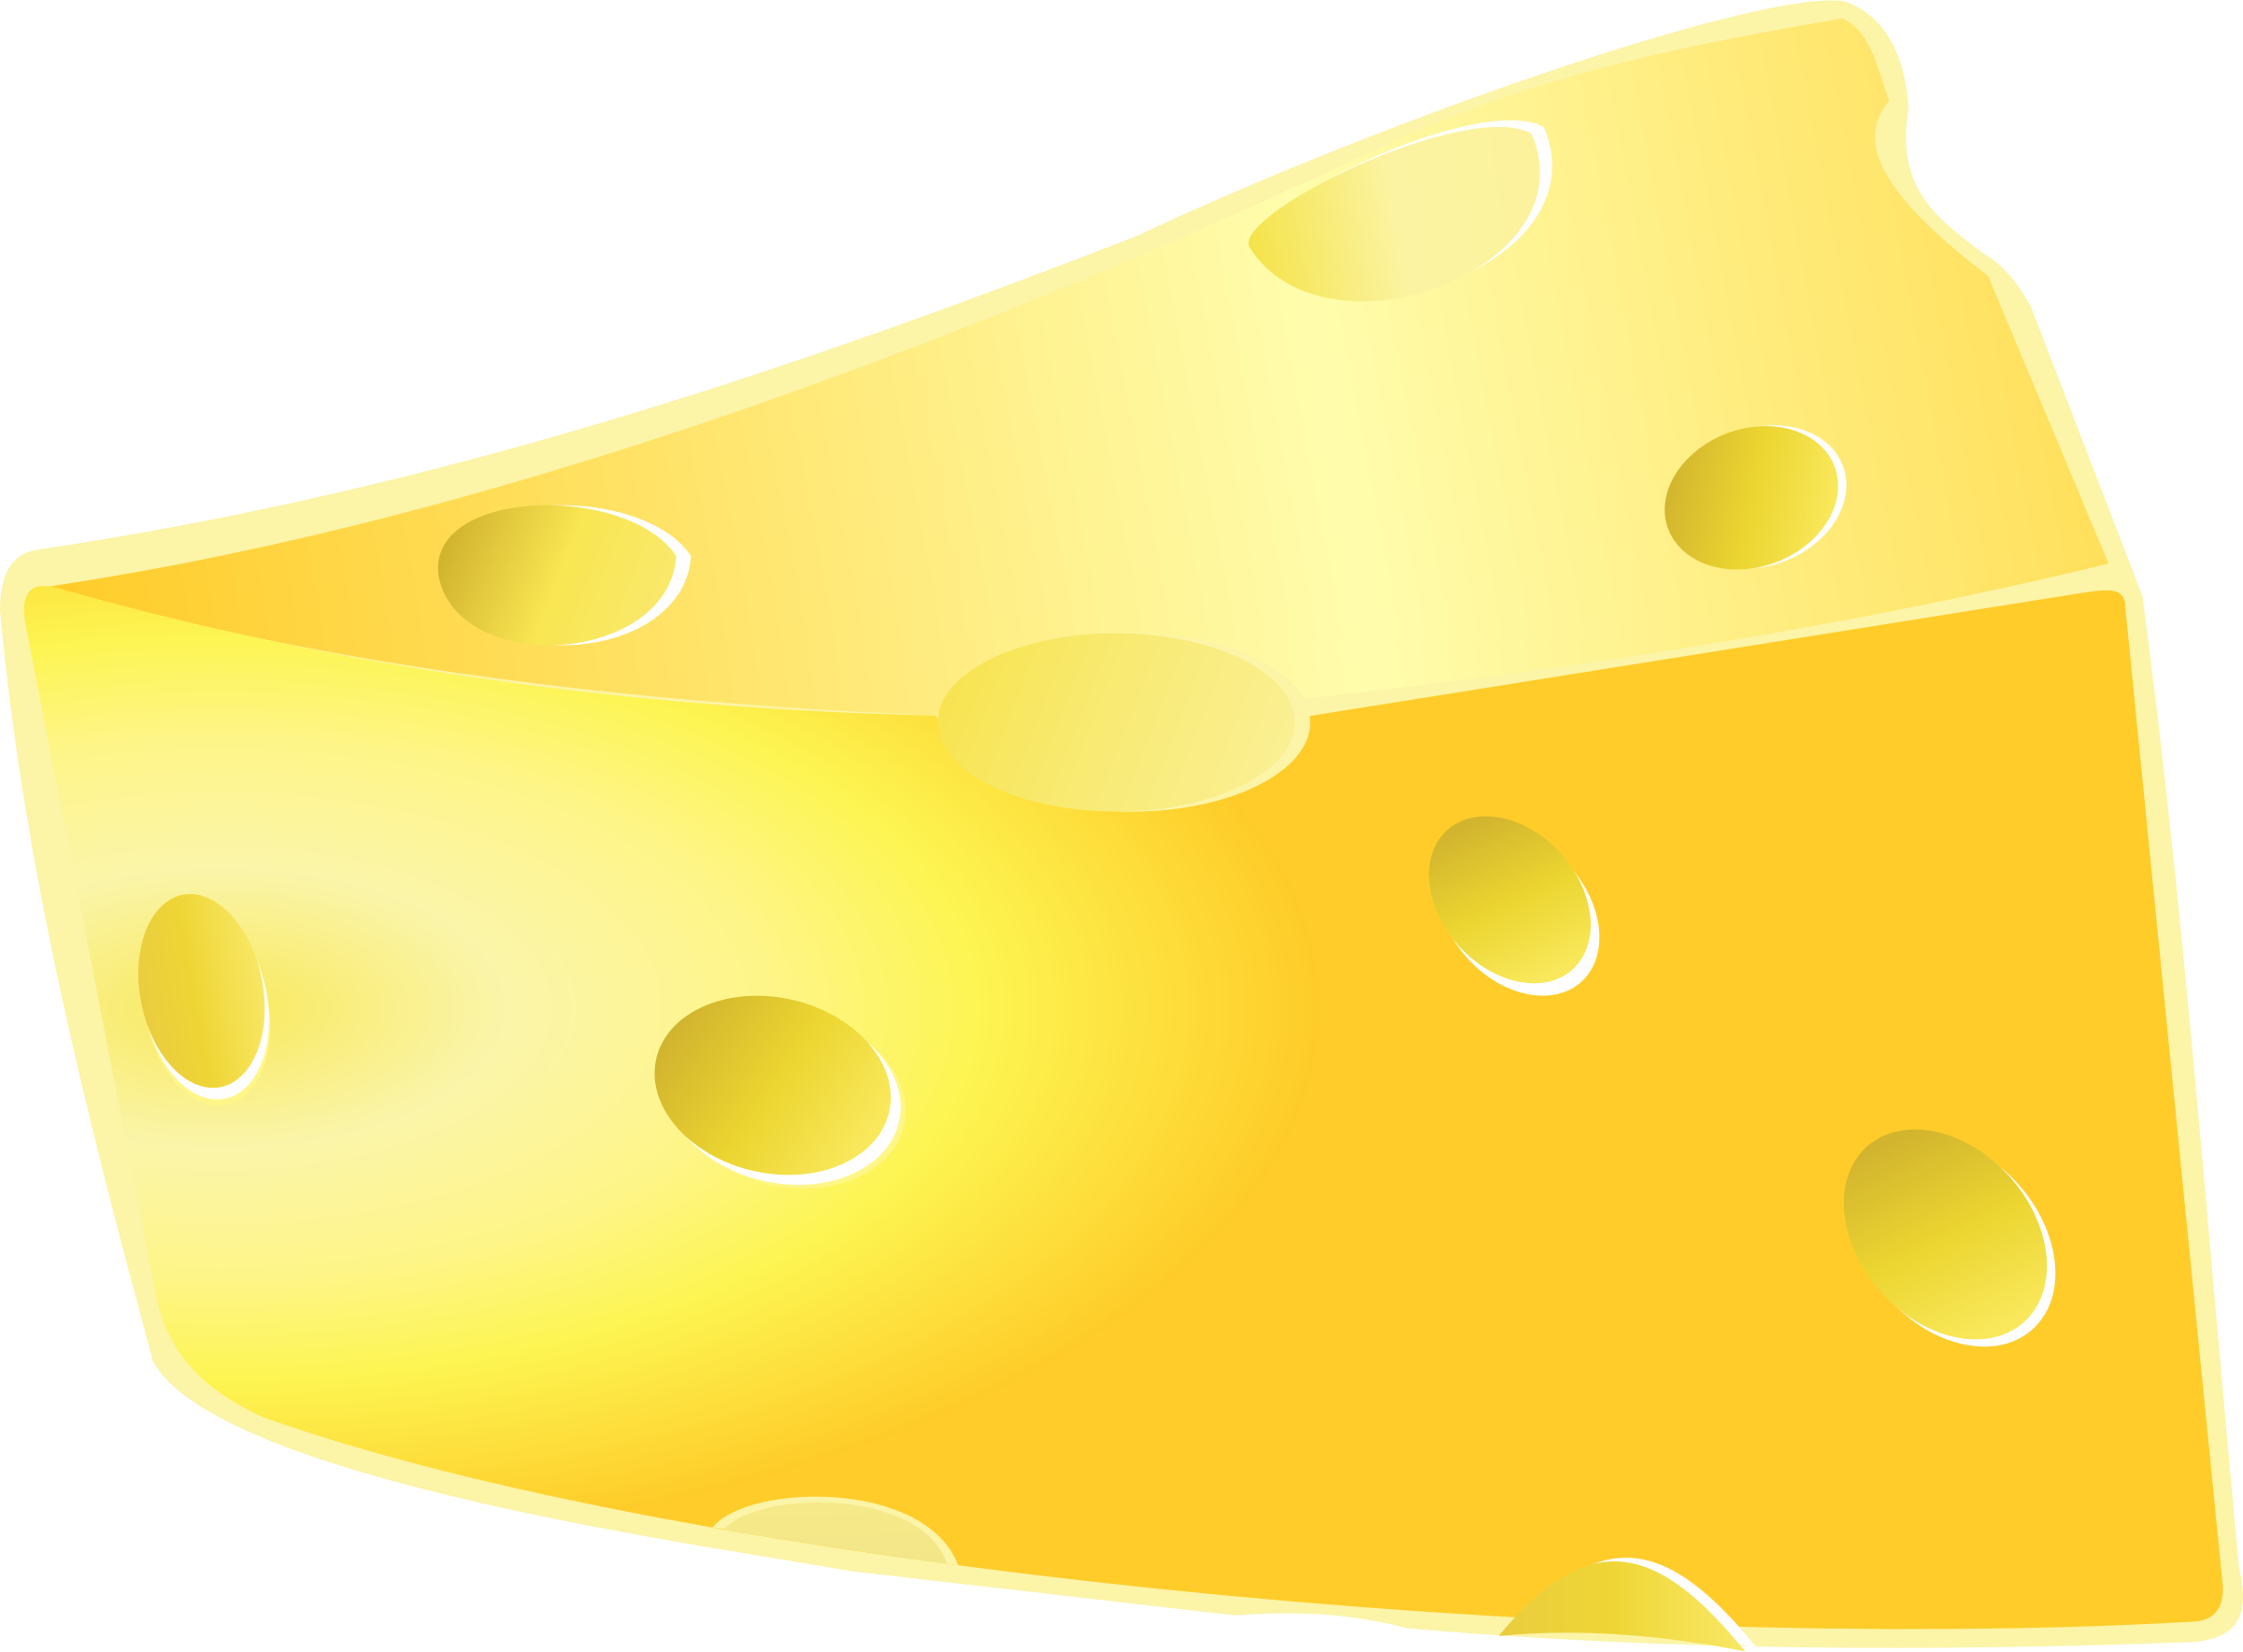 Swiss cheese clipart.